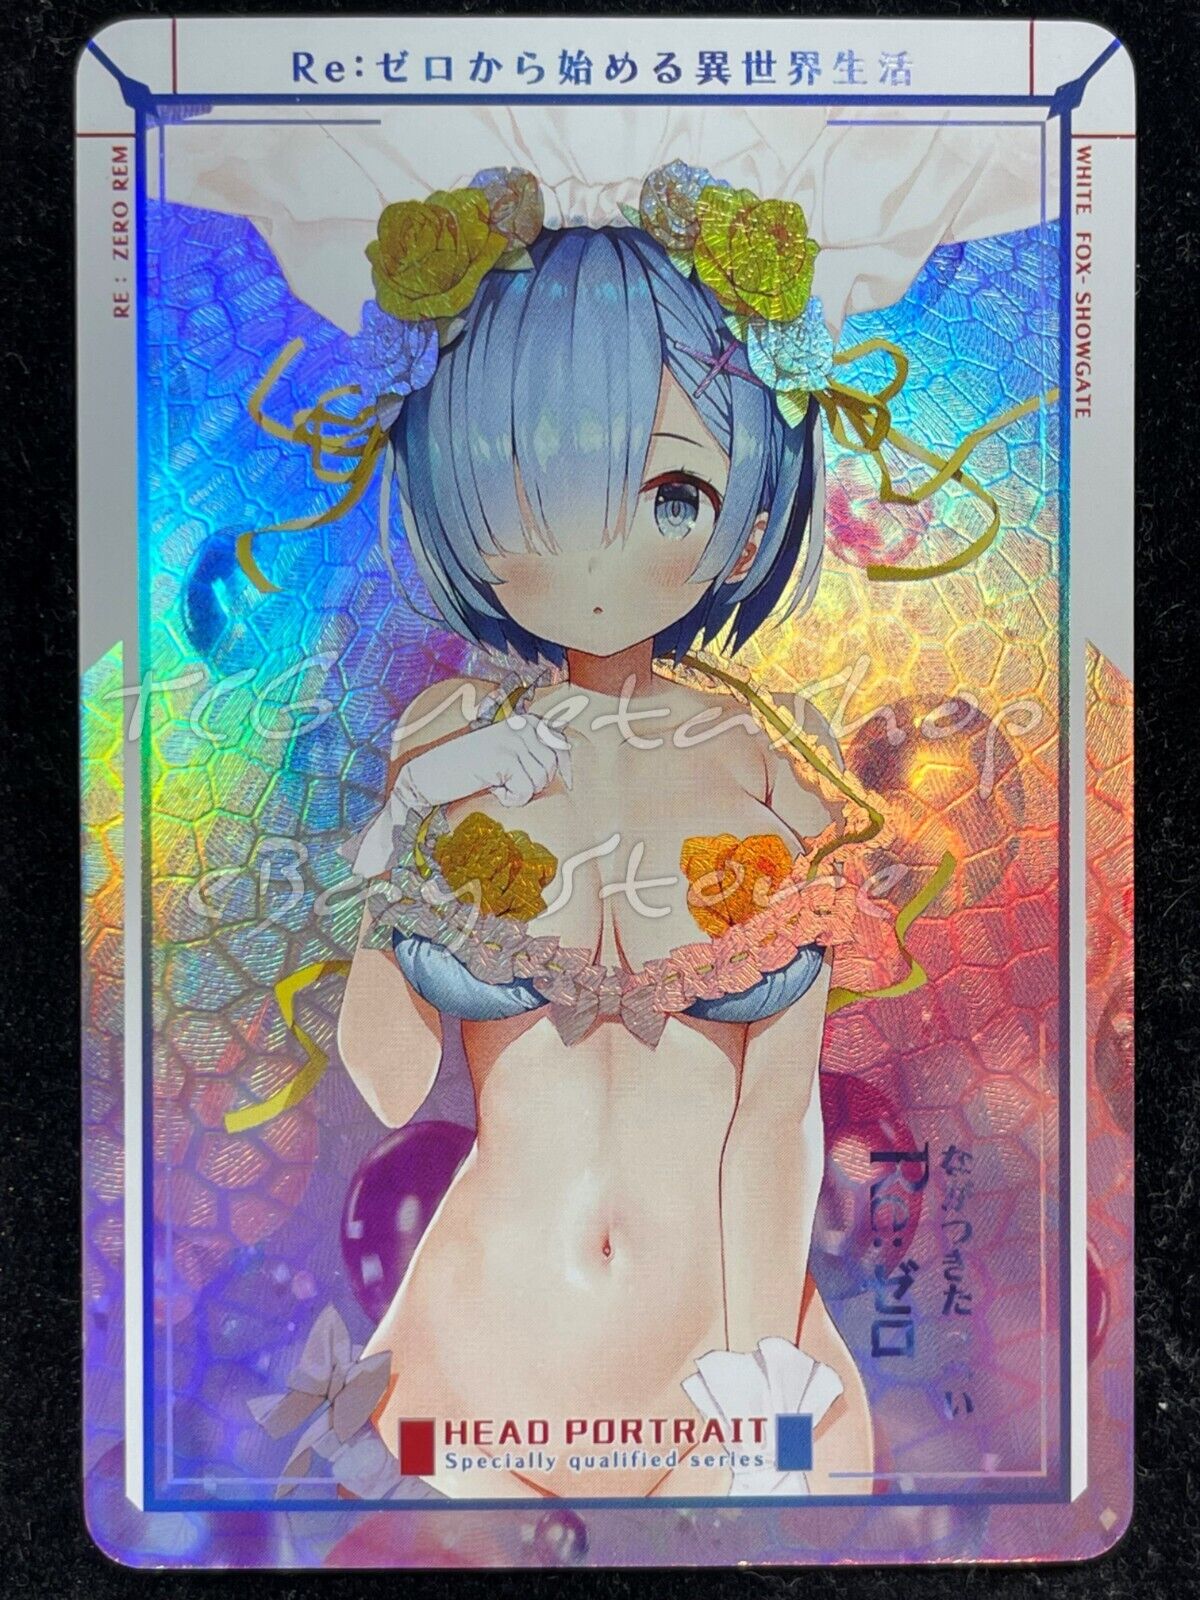 🔥 Rem Re:Zero Goddess Story Anime Card ACG # 934 🔥